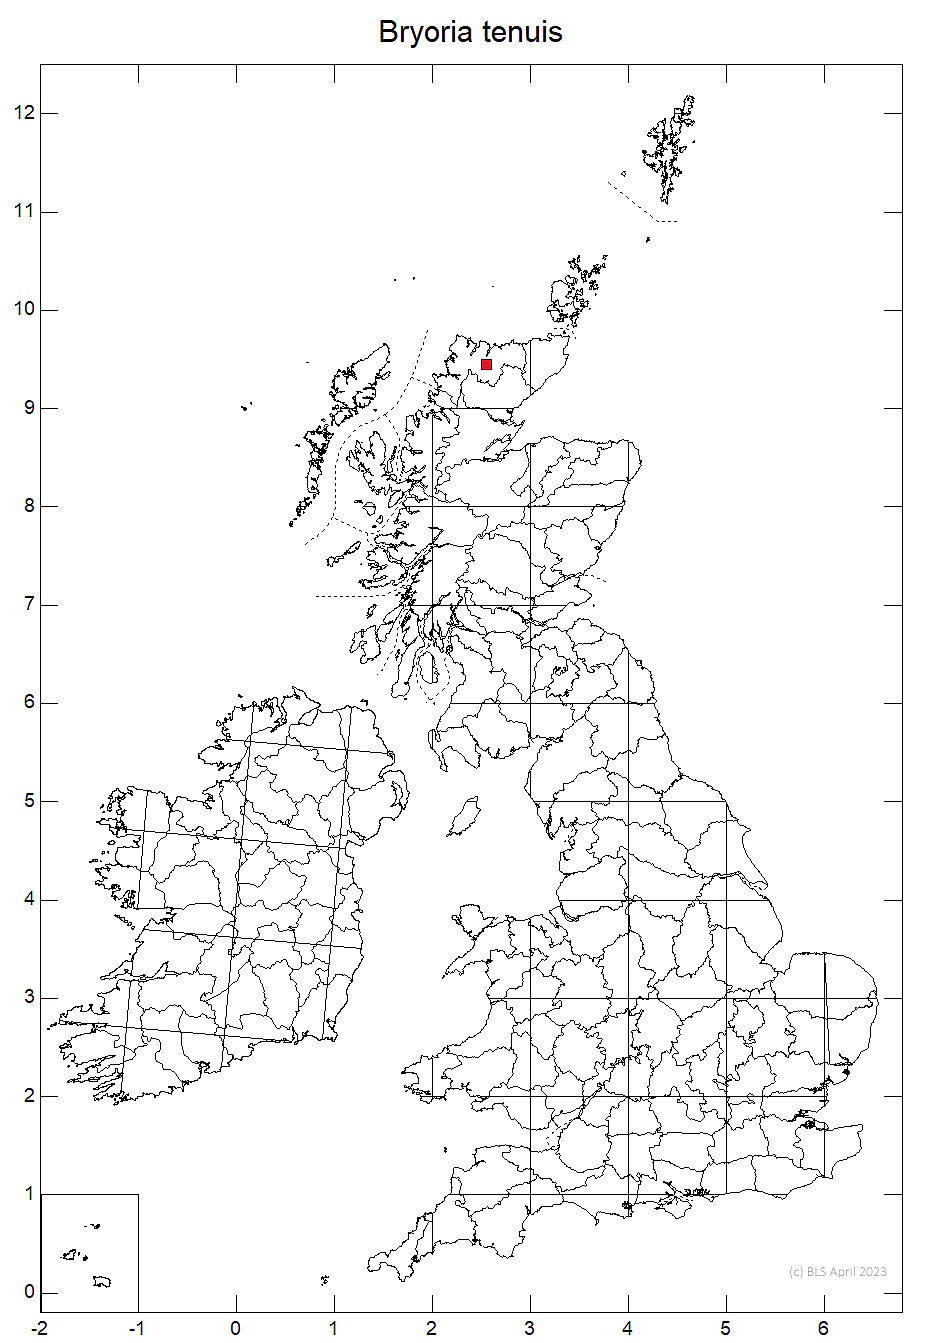 Bryoria tenuis 10km sq distribution map